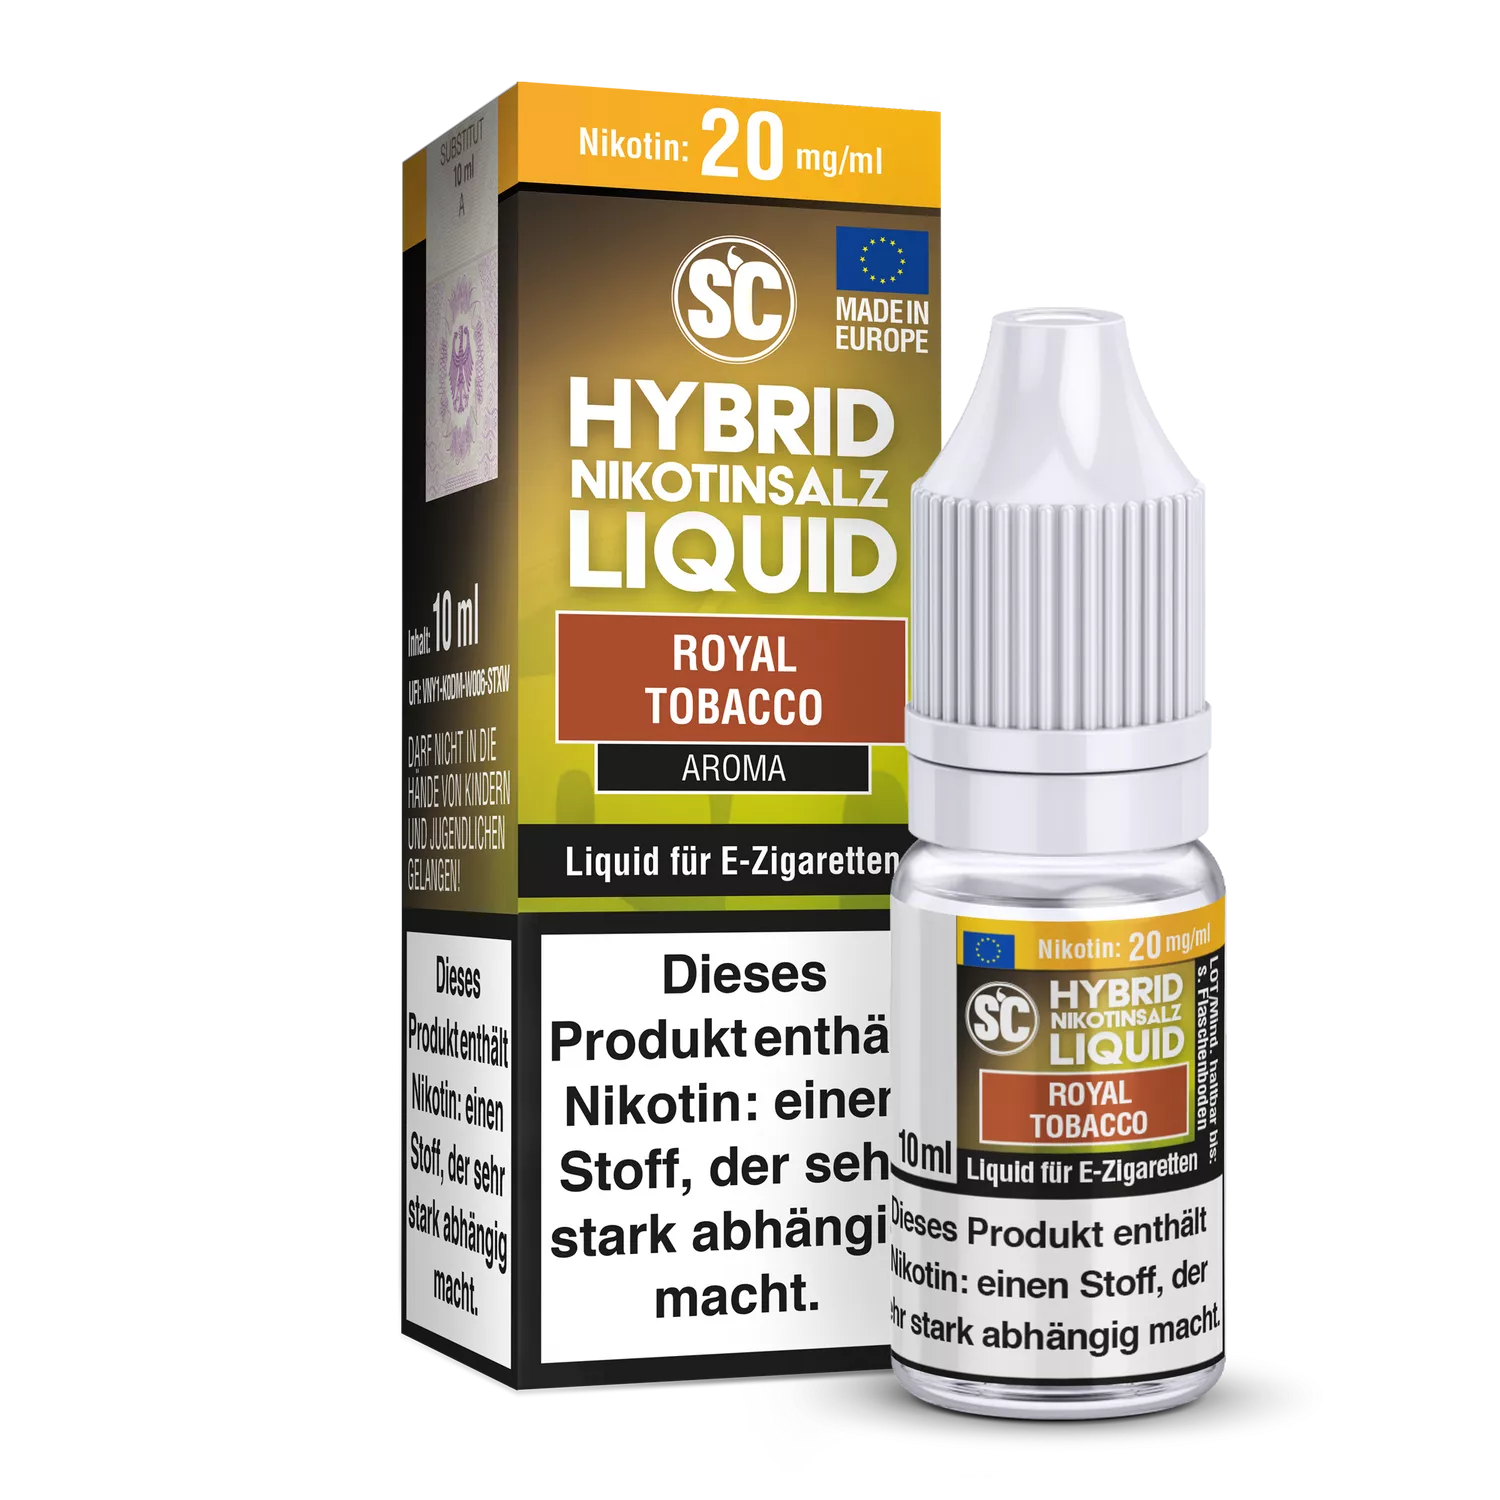 SC Hybrid Nikotinsalz Liquid Royal Tobacco - 20mg/ml